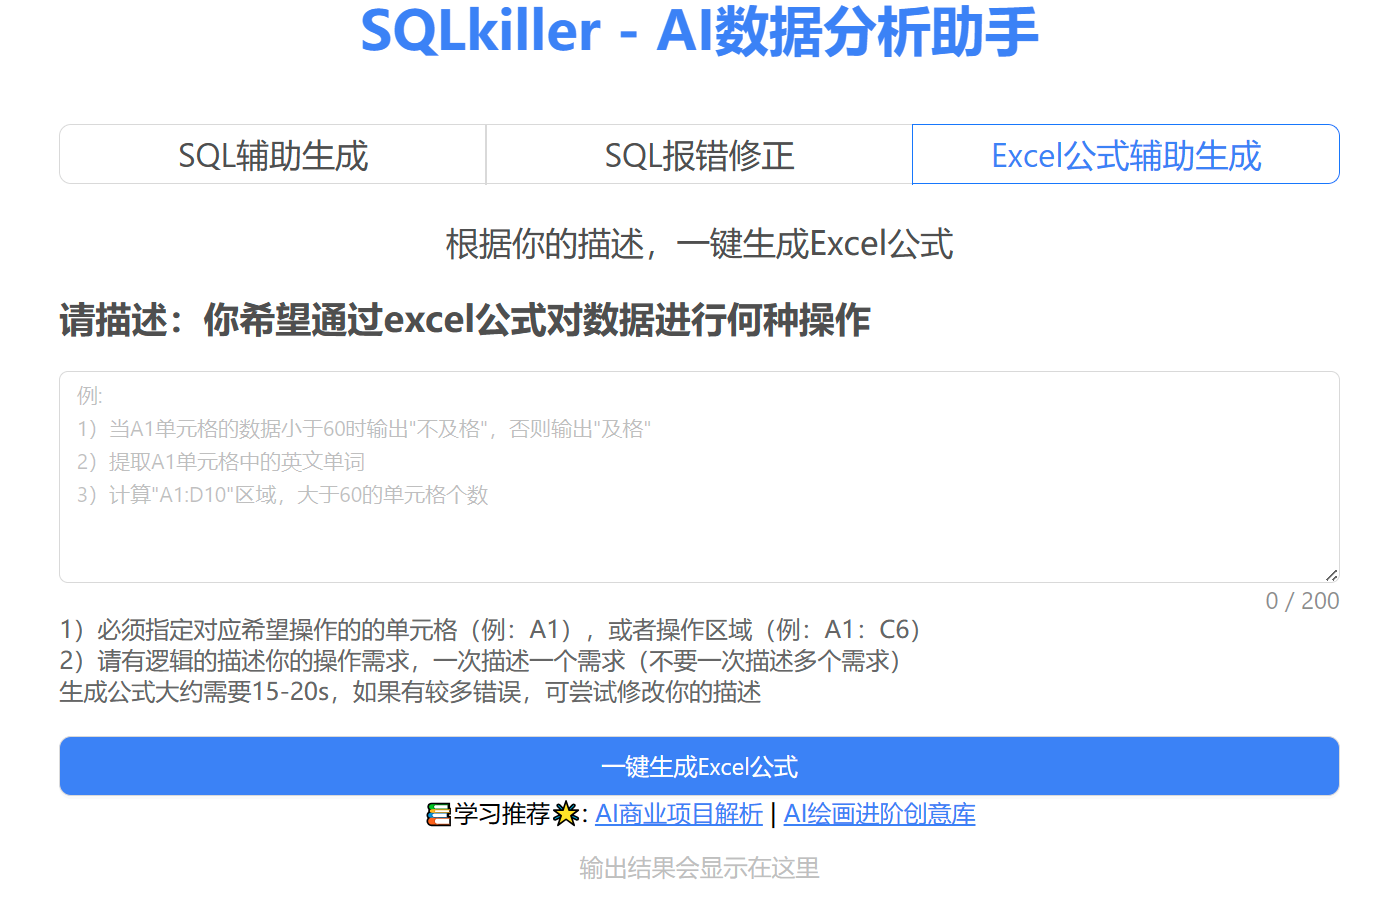 SQLkiller - AI数据分析助手 - www.sqlkiller.com.png